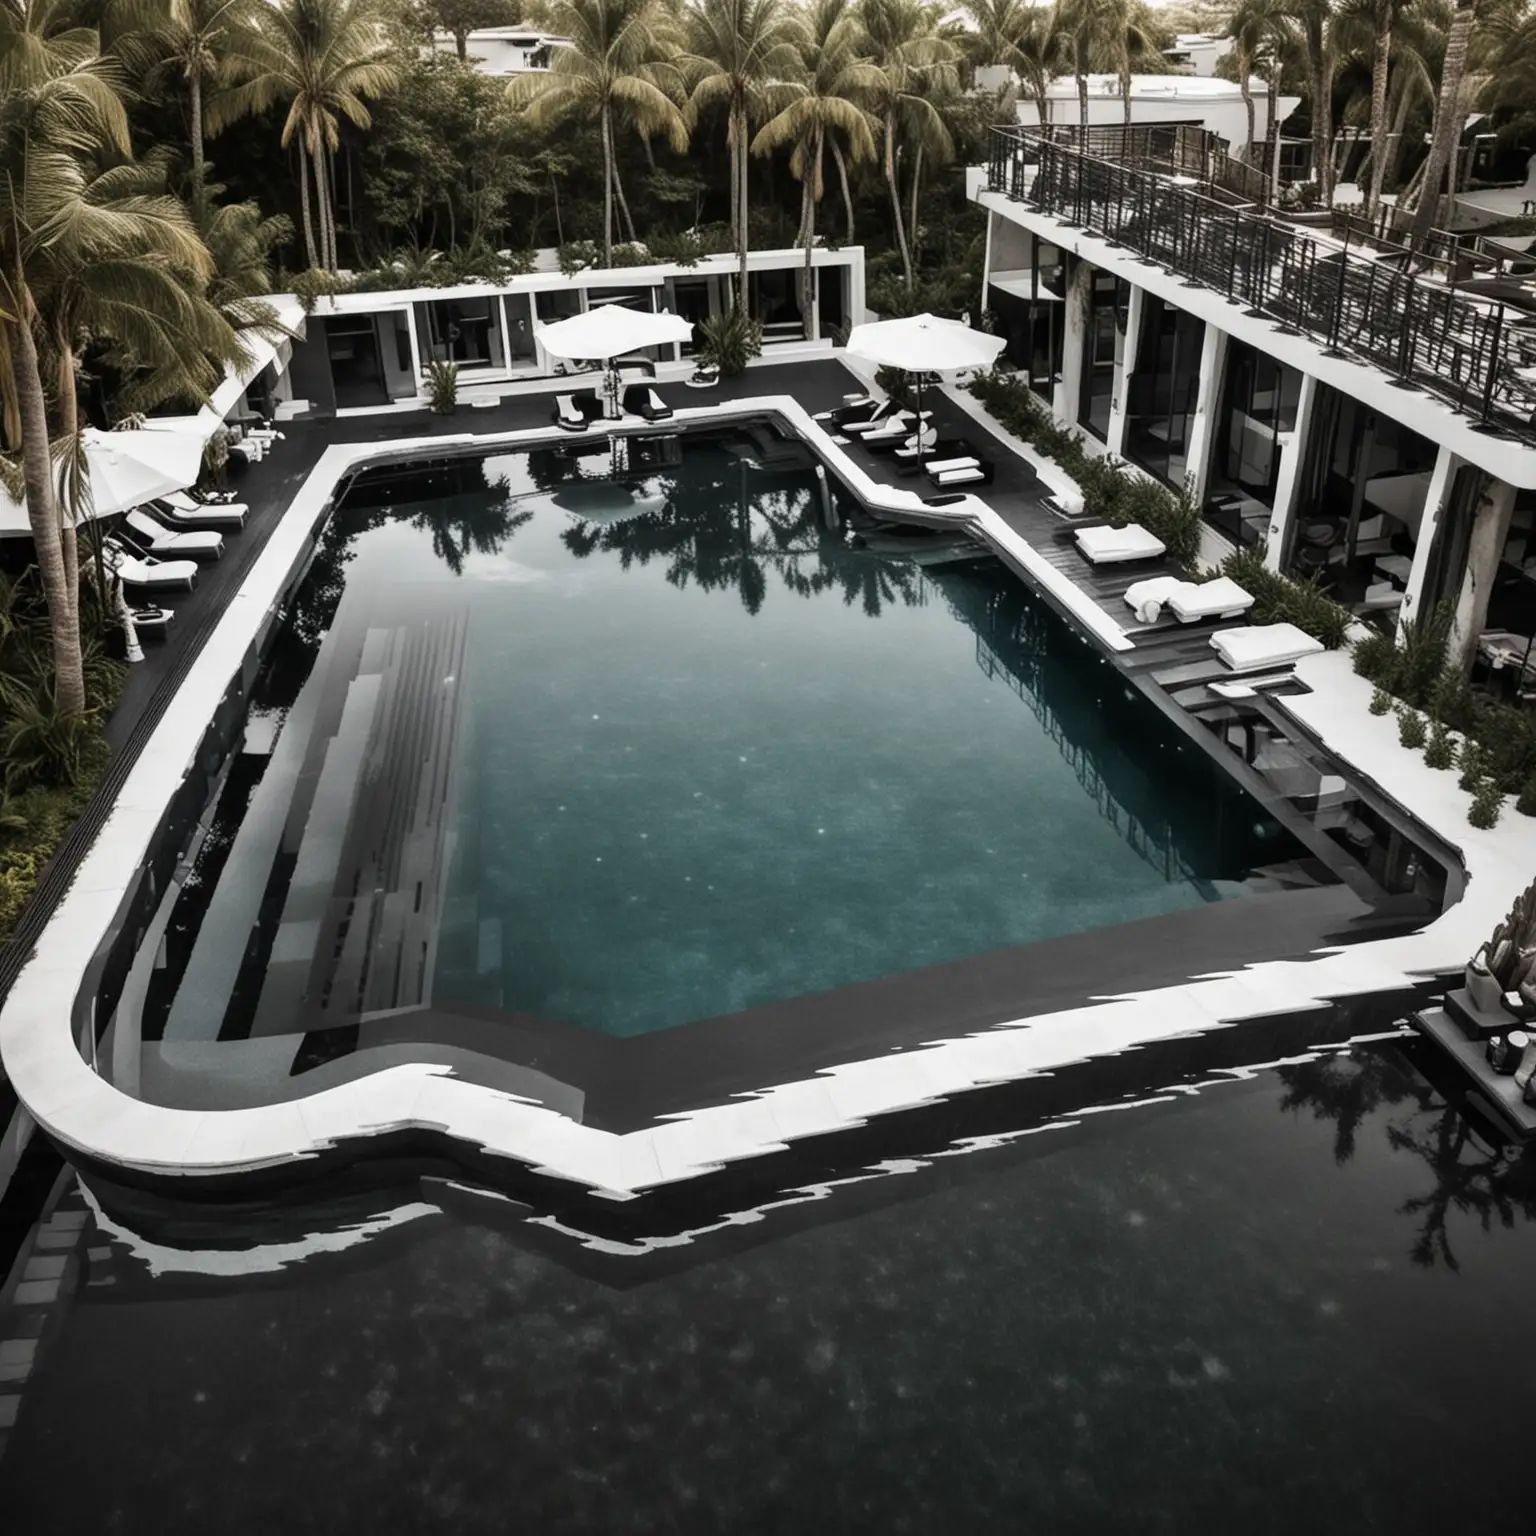 Luxury Hotel Outdoor Pool Futuristic Black and White Design